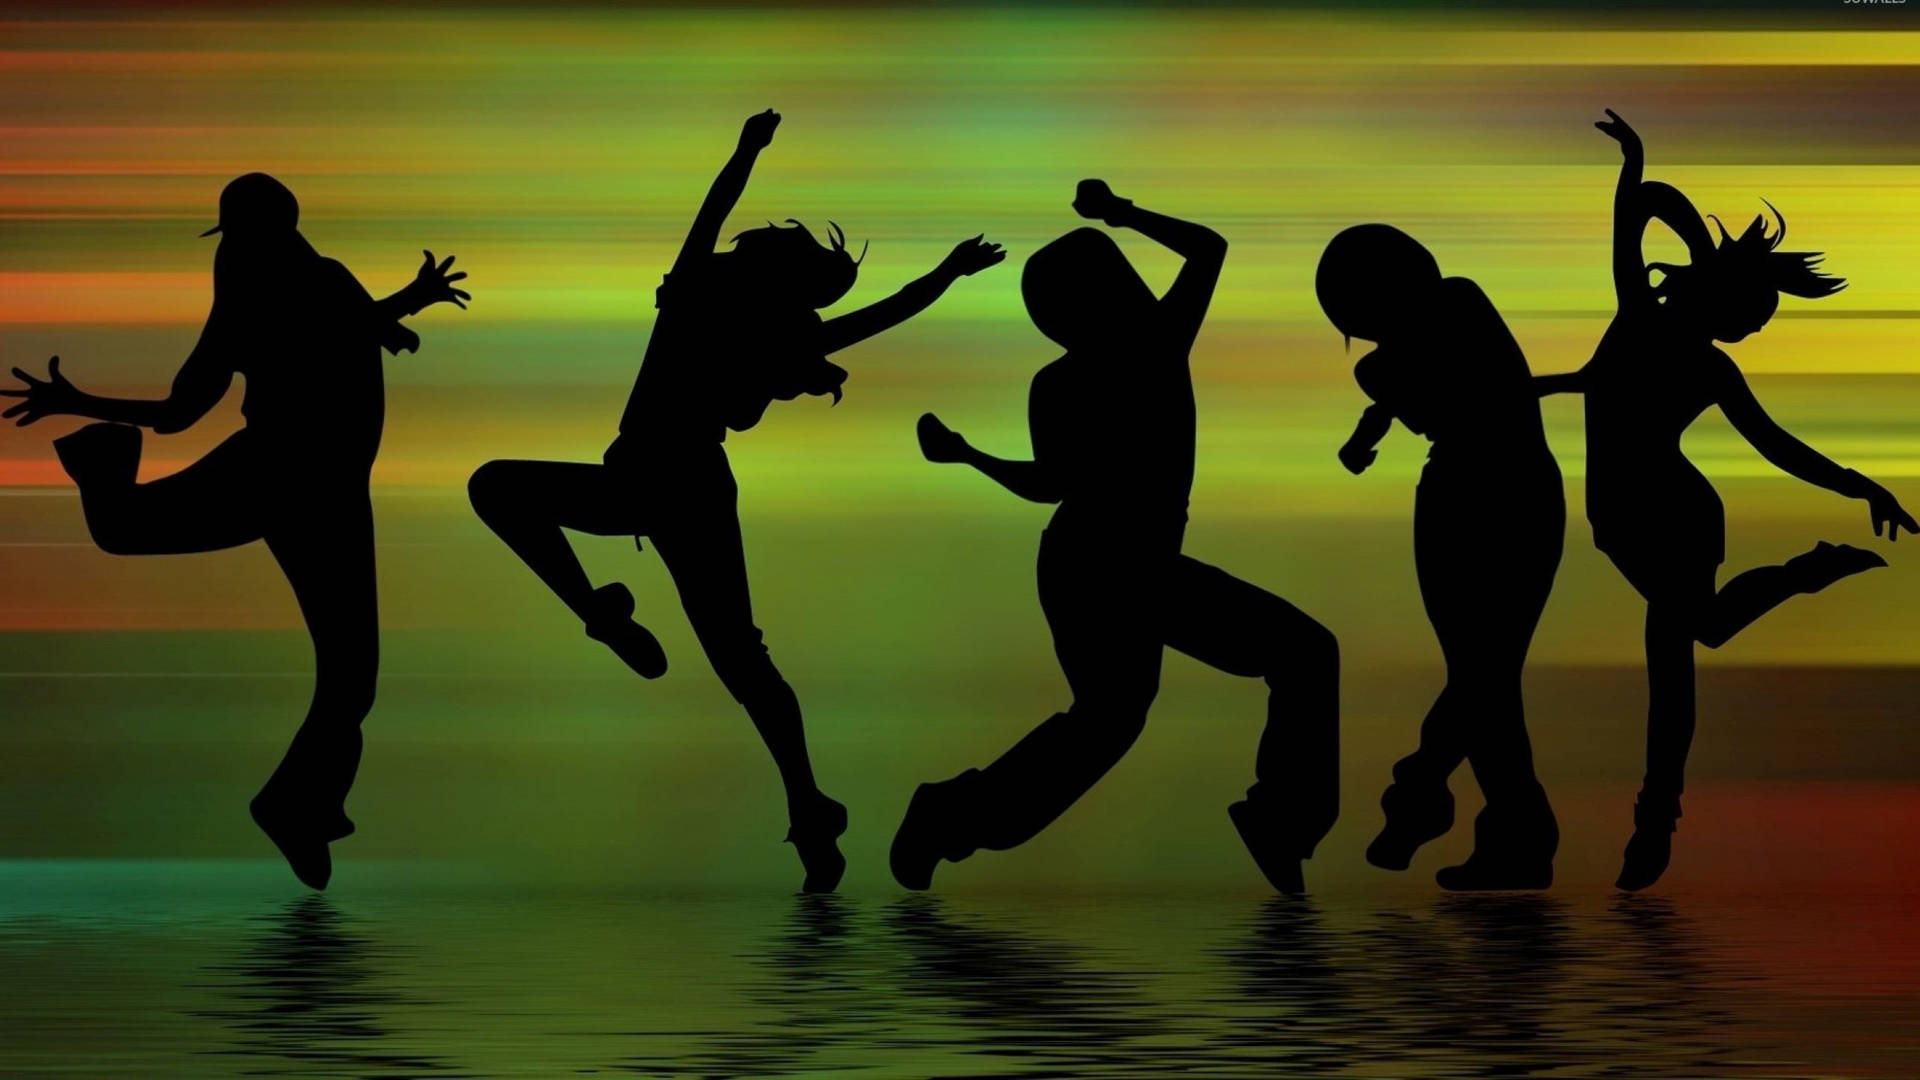 Fun Dance Silhouettes Wallpaper